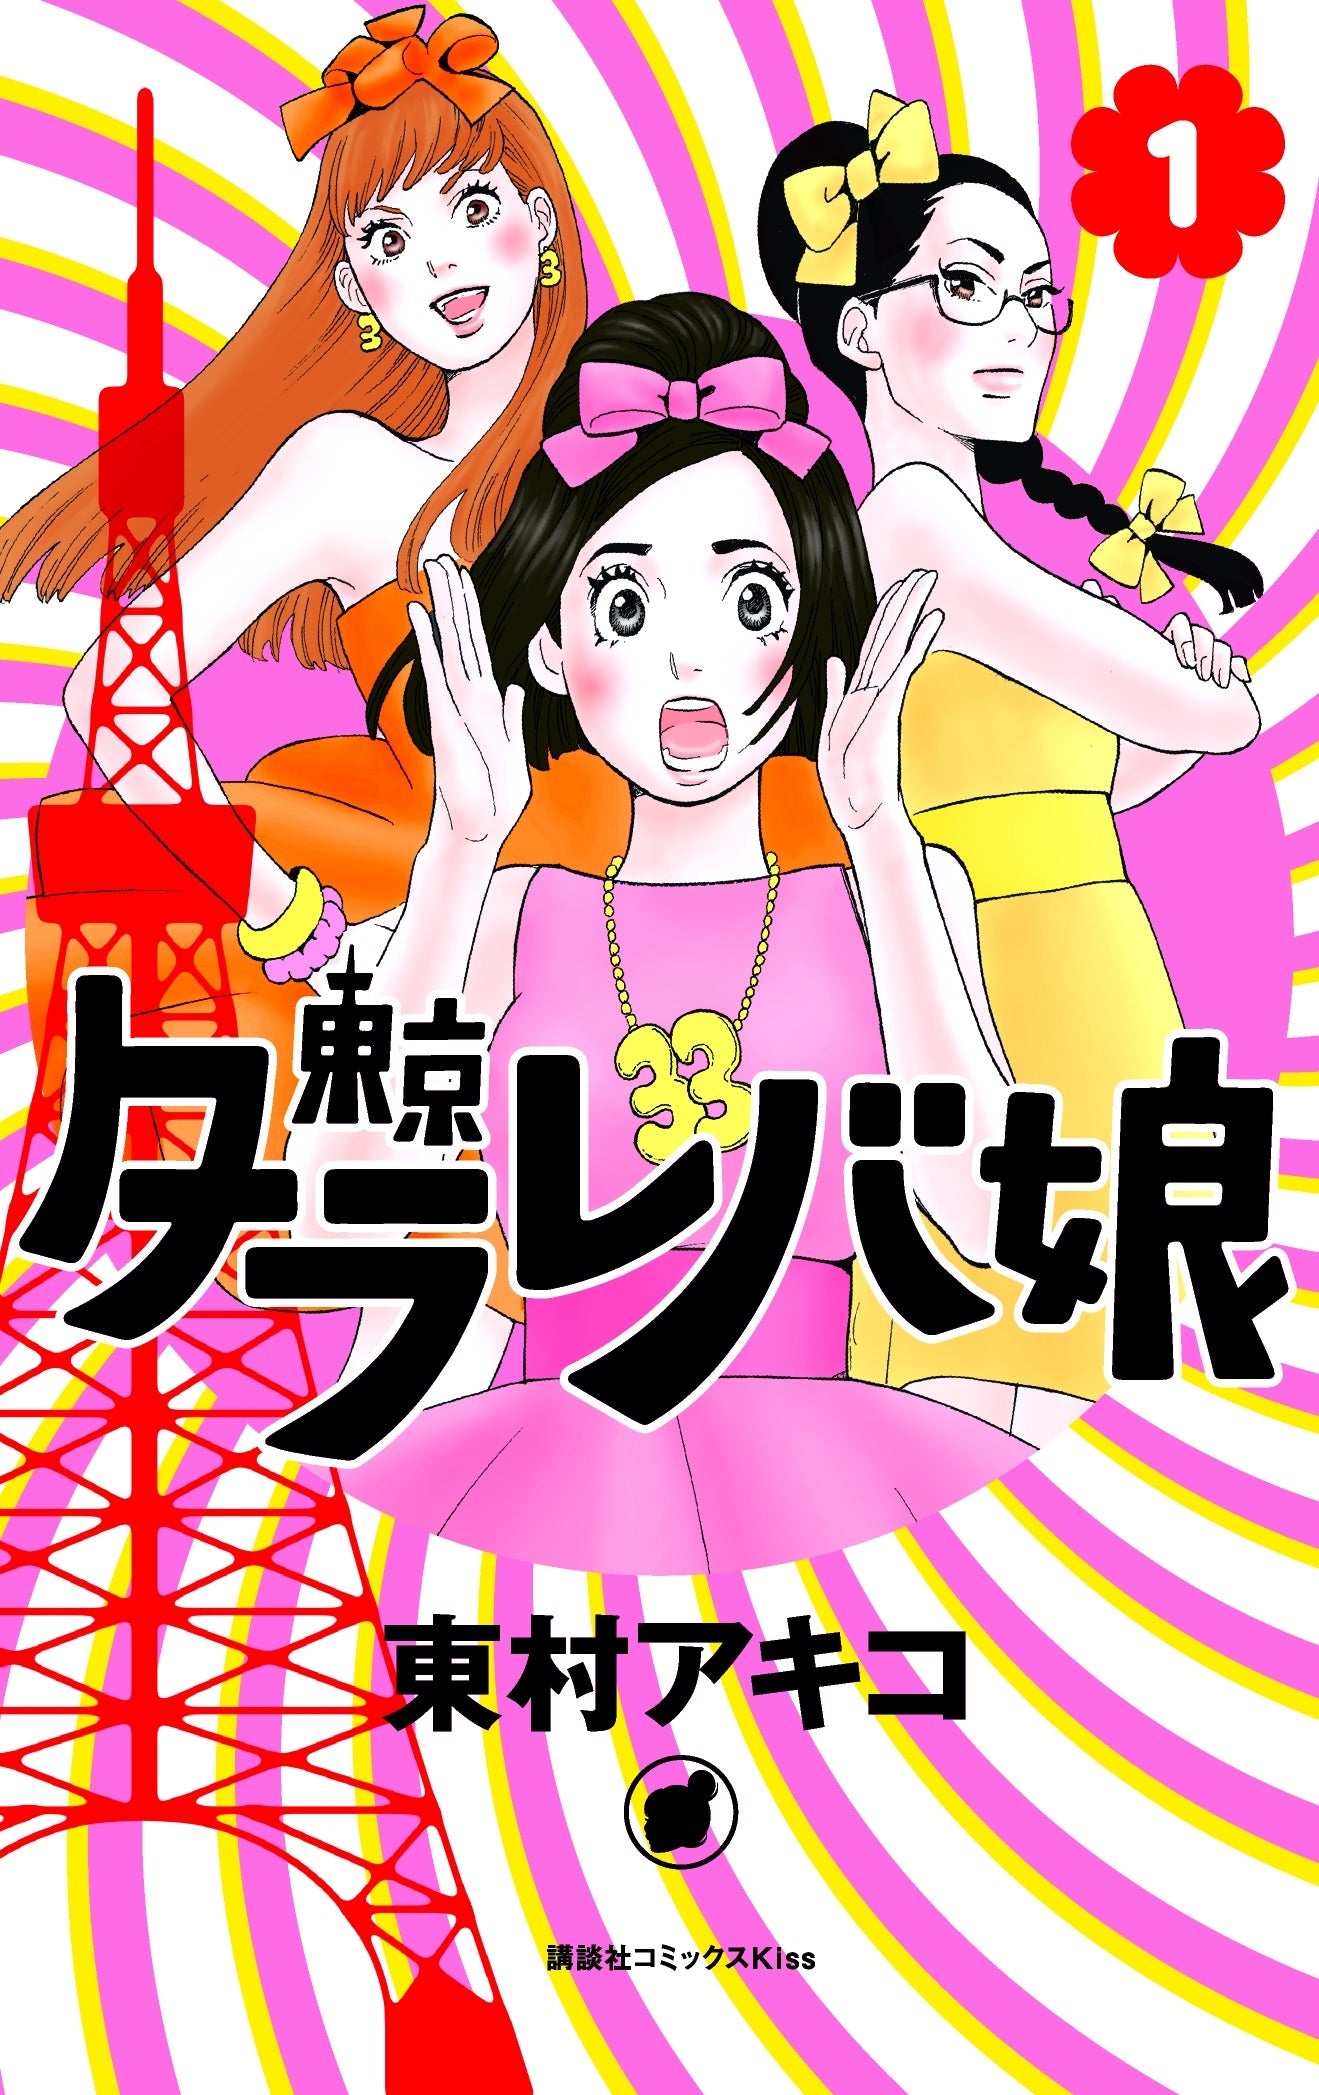 Tokyo Tarareba Girls, Vol. 1